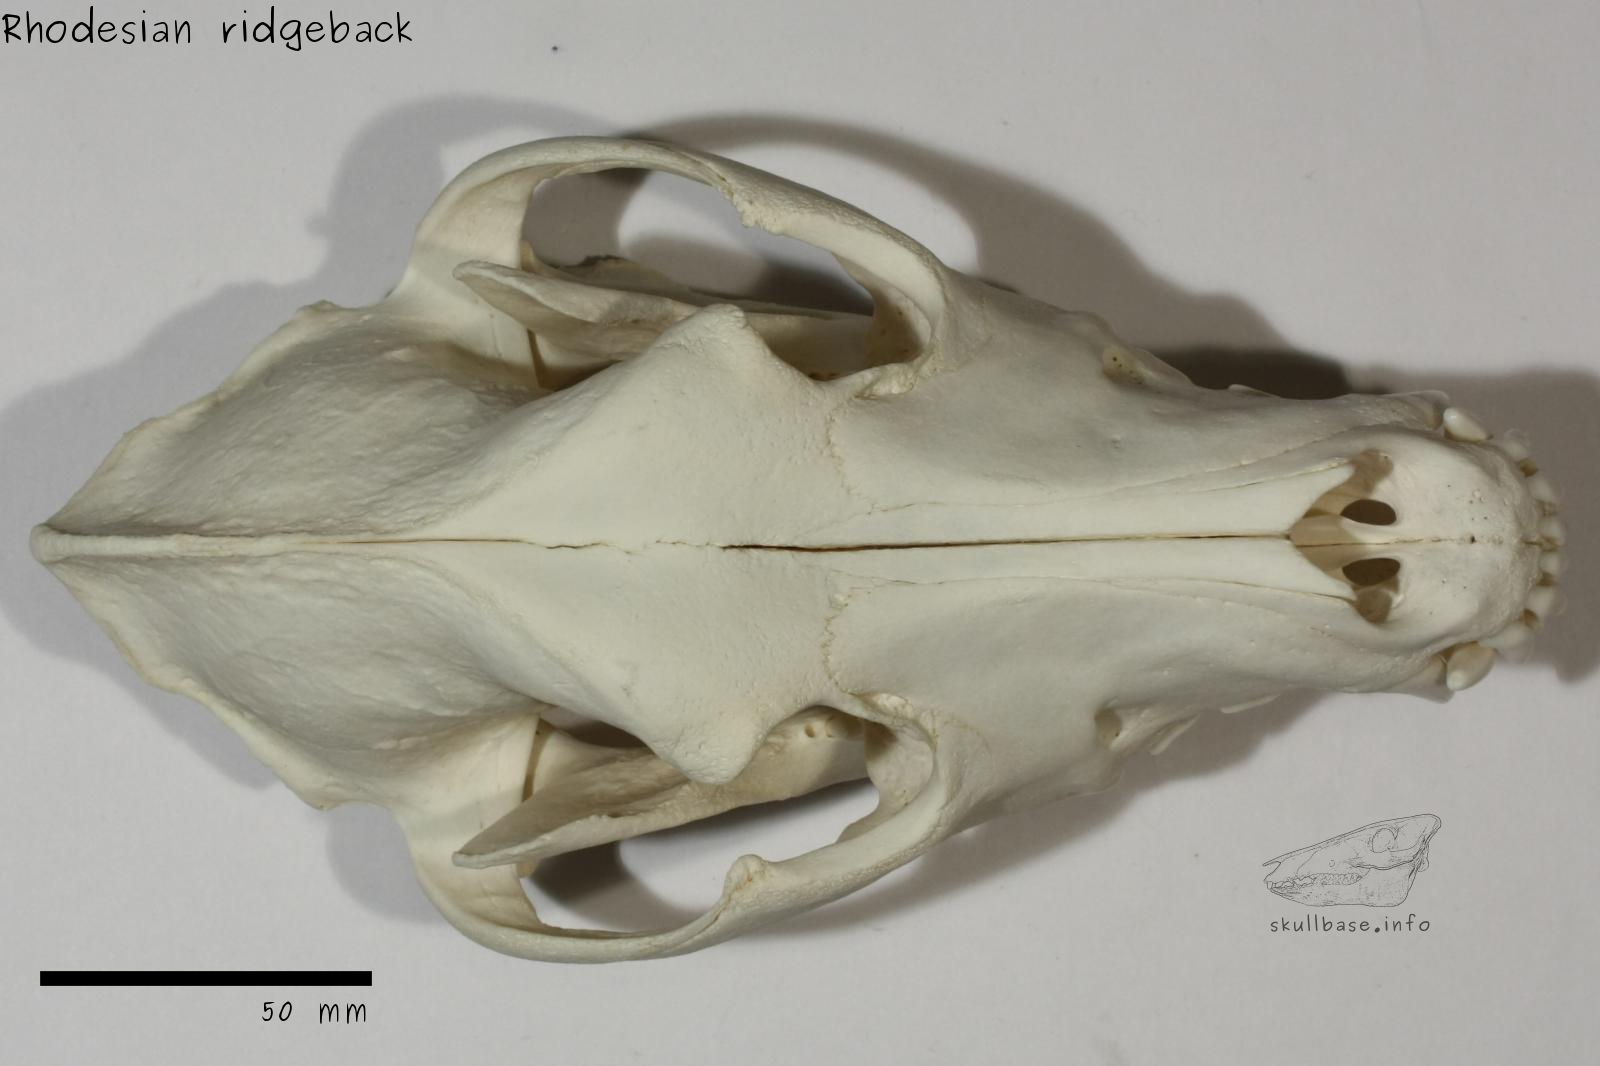 Rhodesian ridgeback (Canis lupus familiaris) skull dorsal view